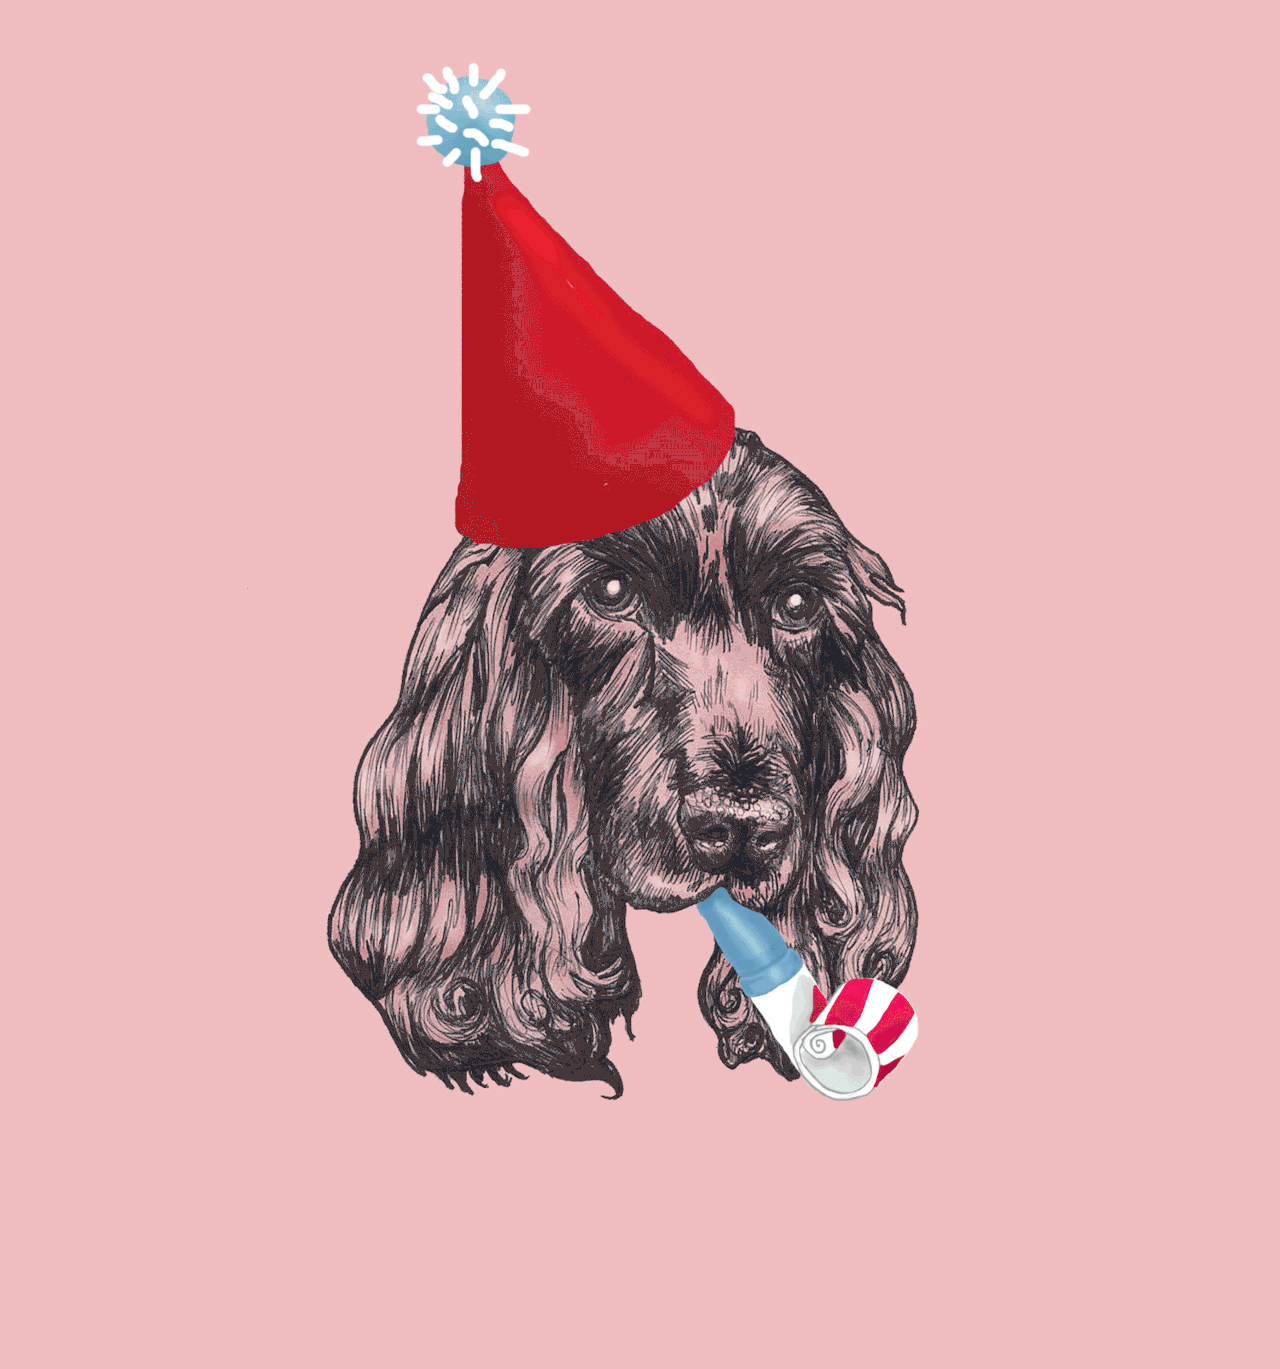 Party Doggo GIFART created by freelance illustrator Shauna Mckeon